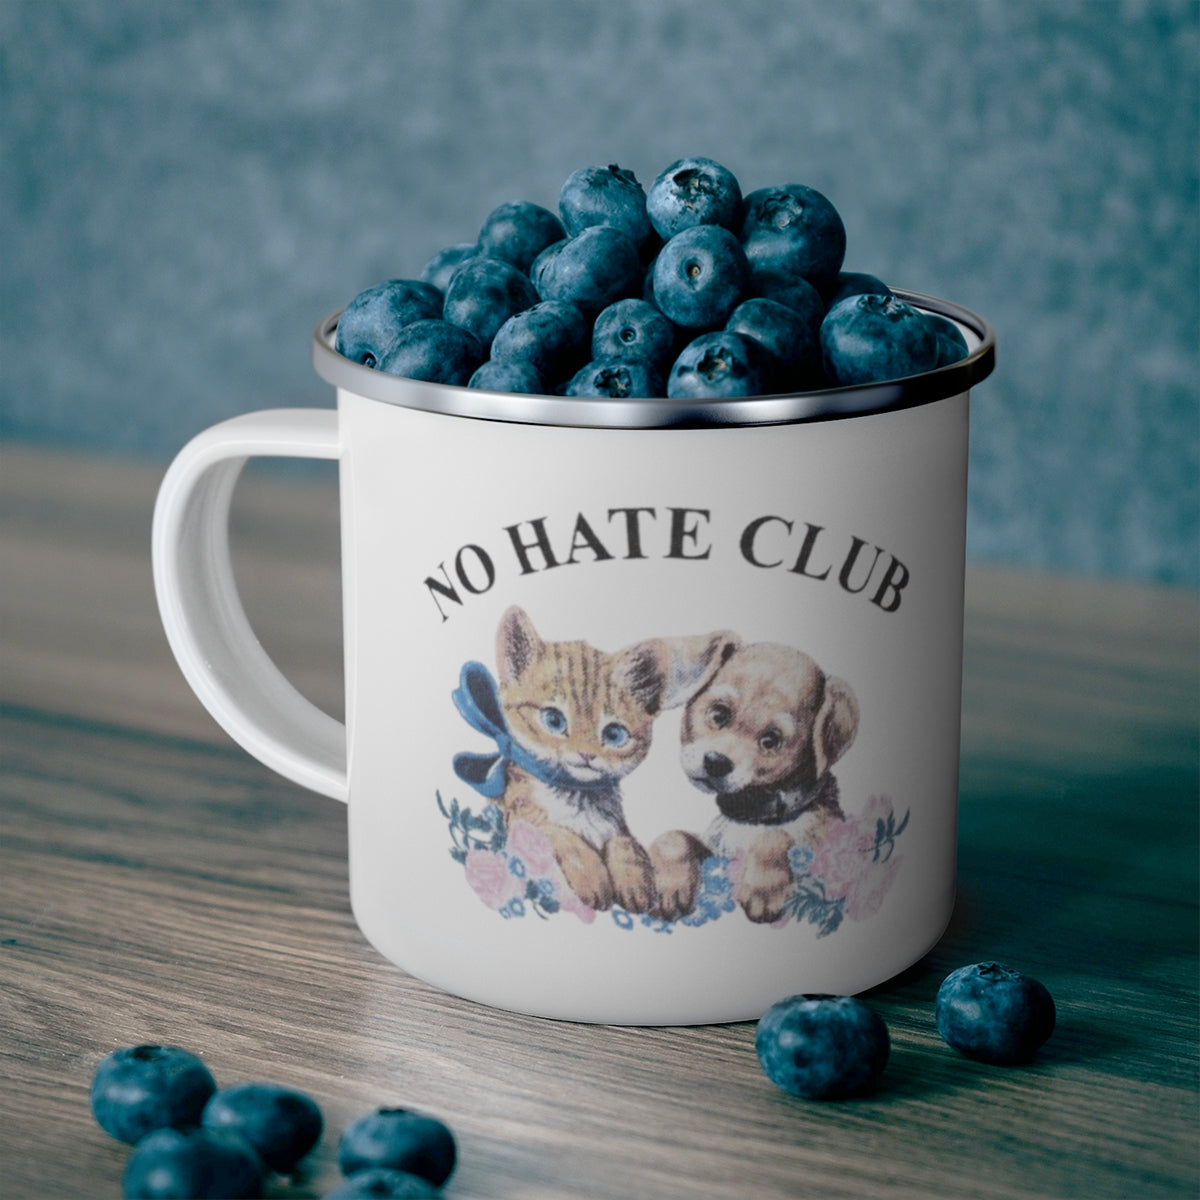 Cute Baby Animal Enamel Camping Mug, No Hate Spread Positivity Coffee Mug, Gift for Friend Friendsgiving Holiday Mug